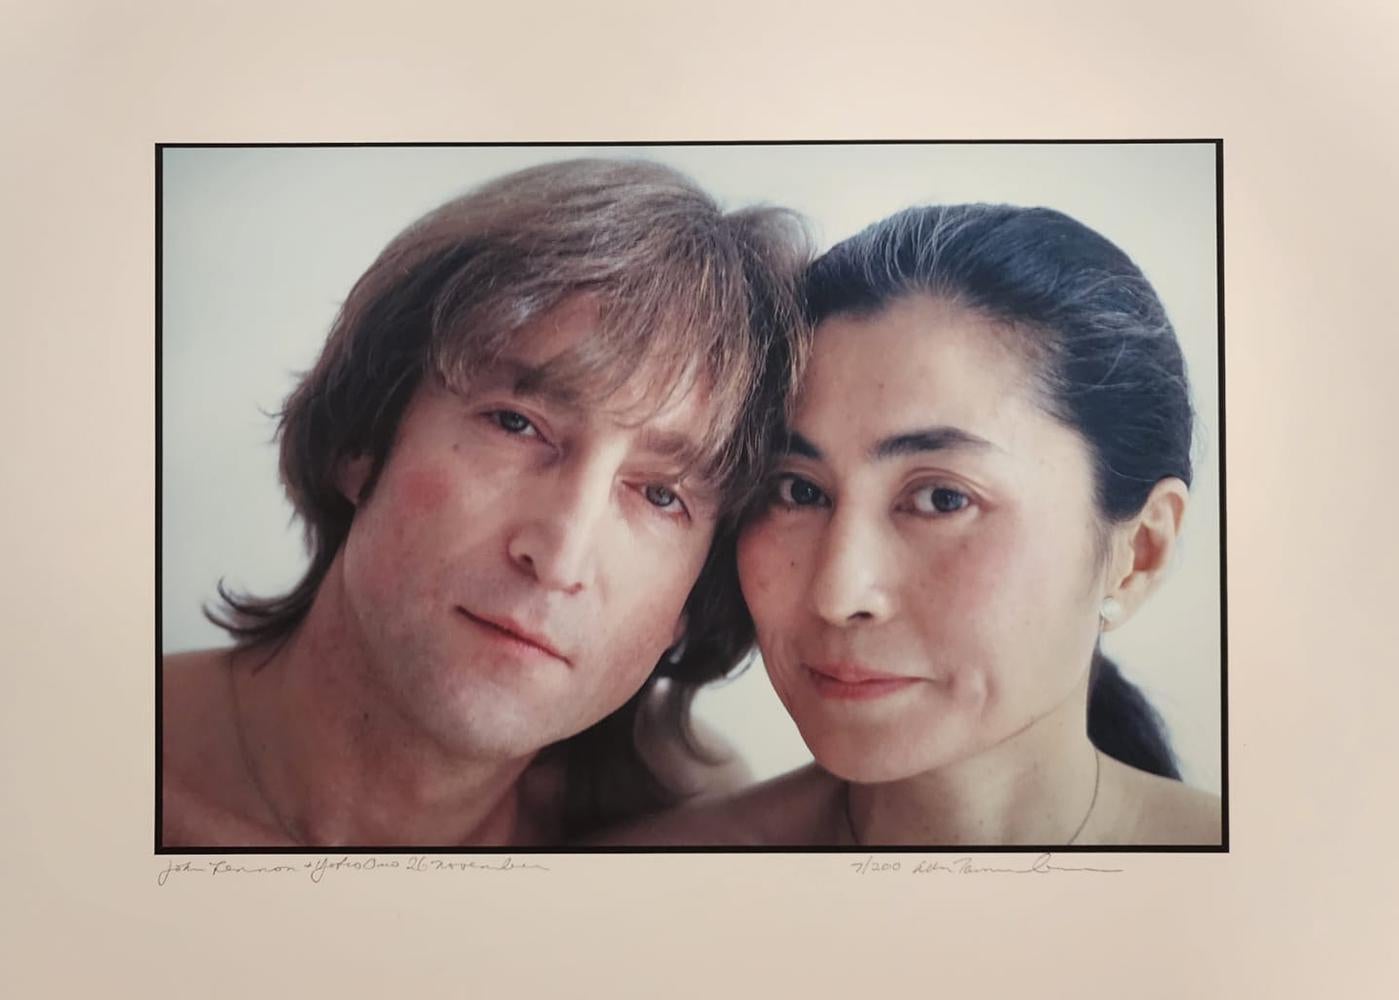 Allan Tannenbaum Figurative Photograph - John Lennon and Yoko Ono, Faces Smiling, NYC, 1980